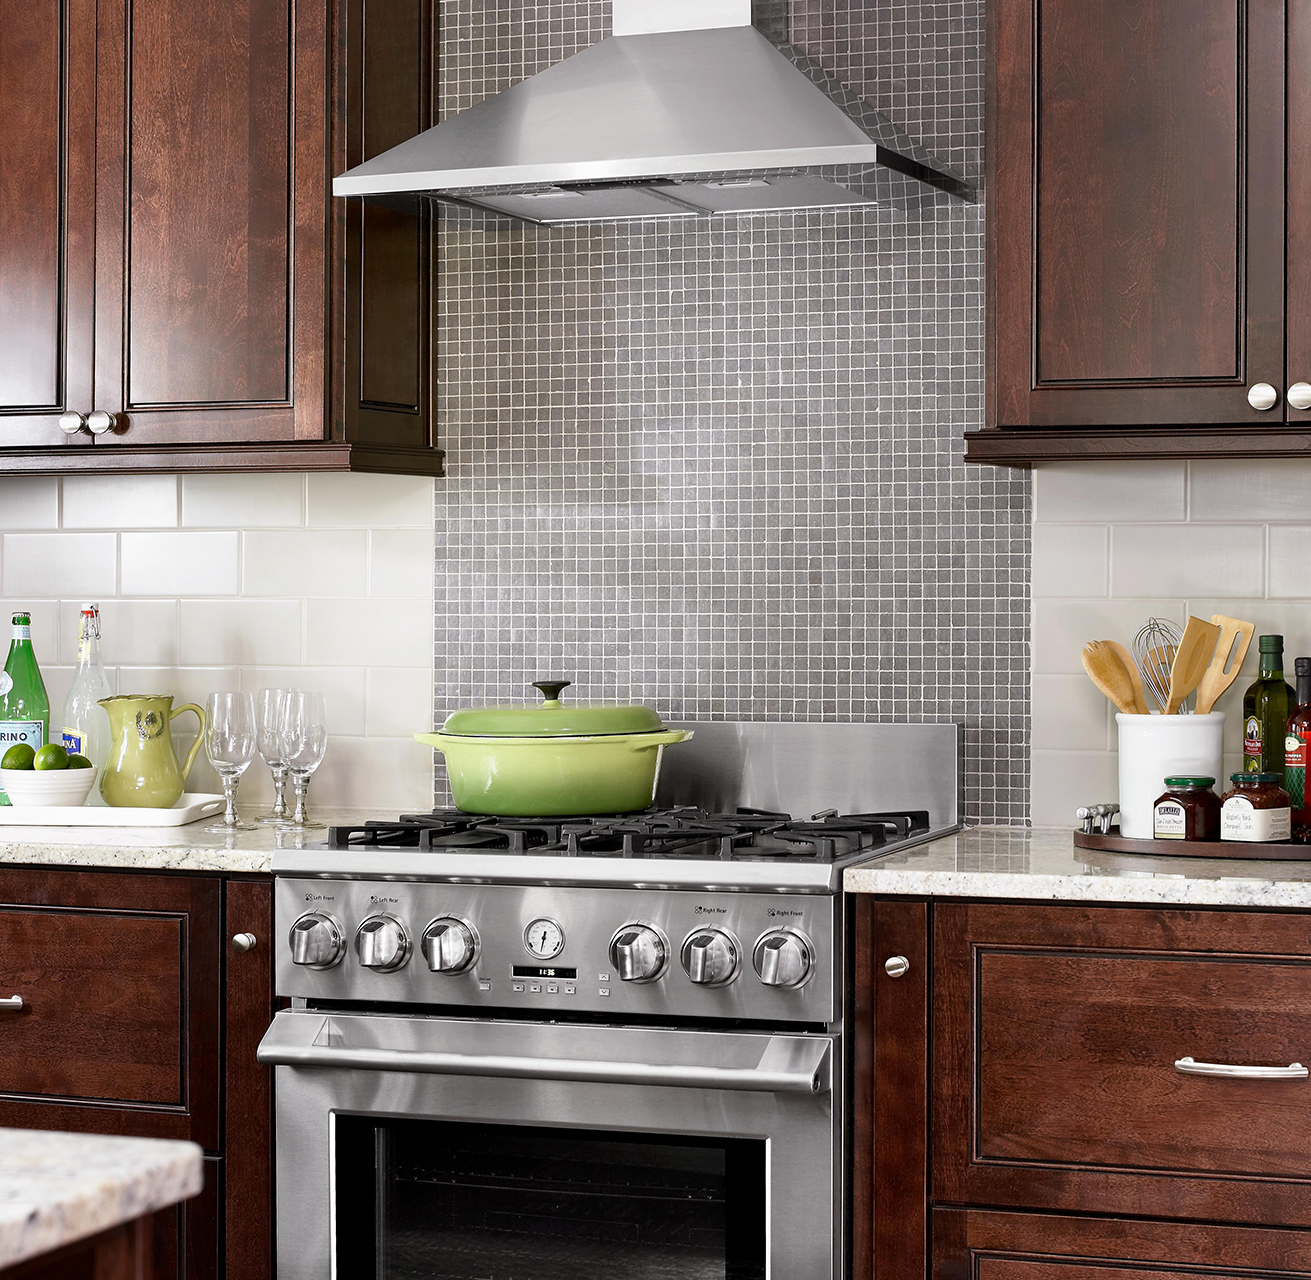 Add a backsplash behind your stove